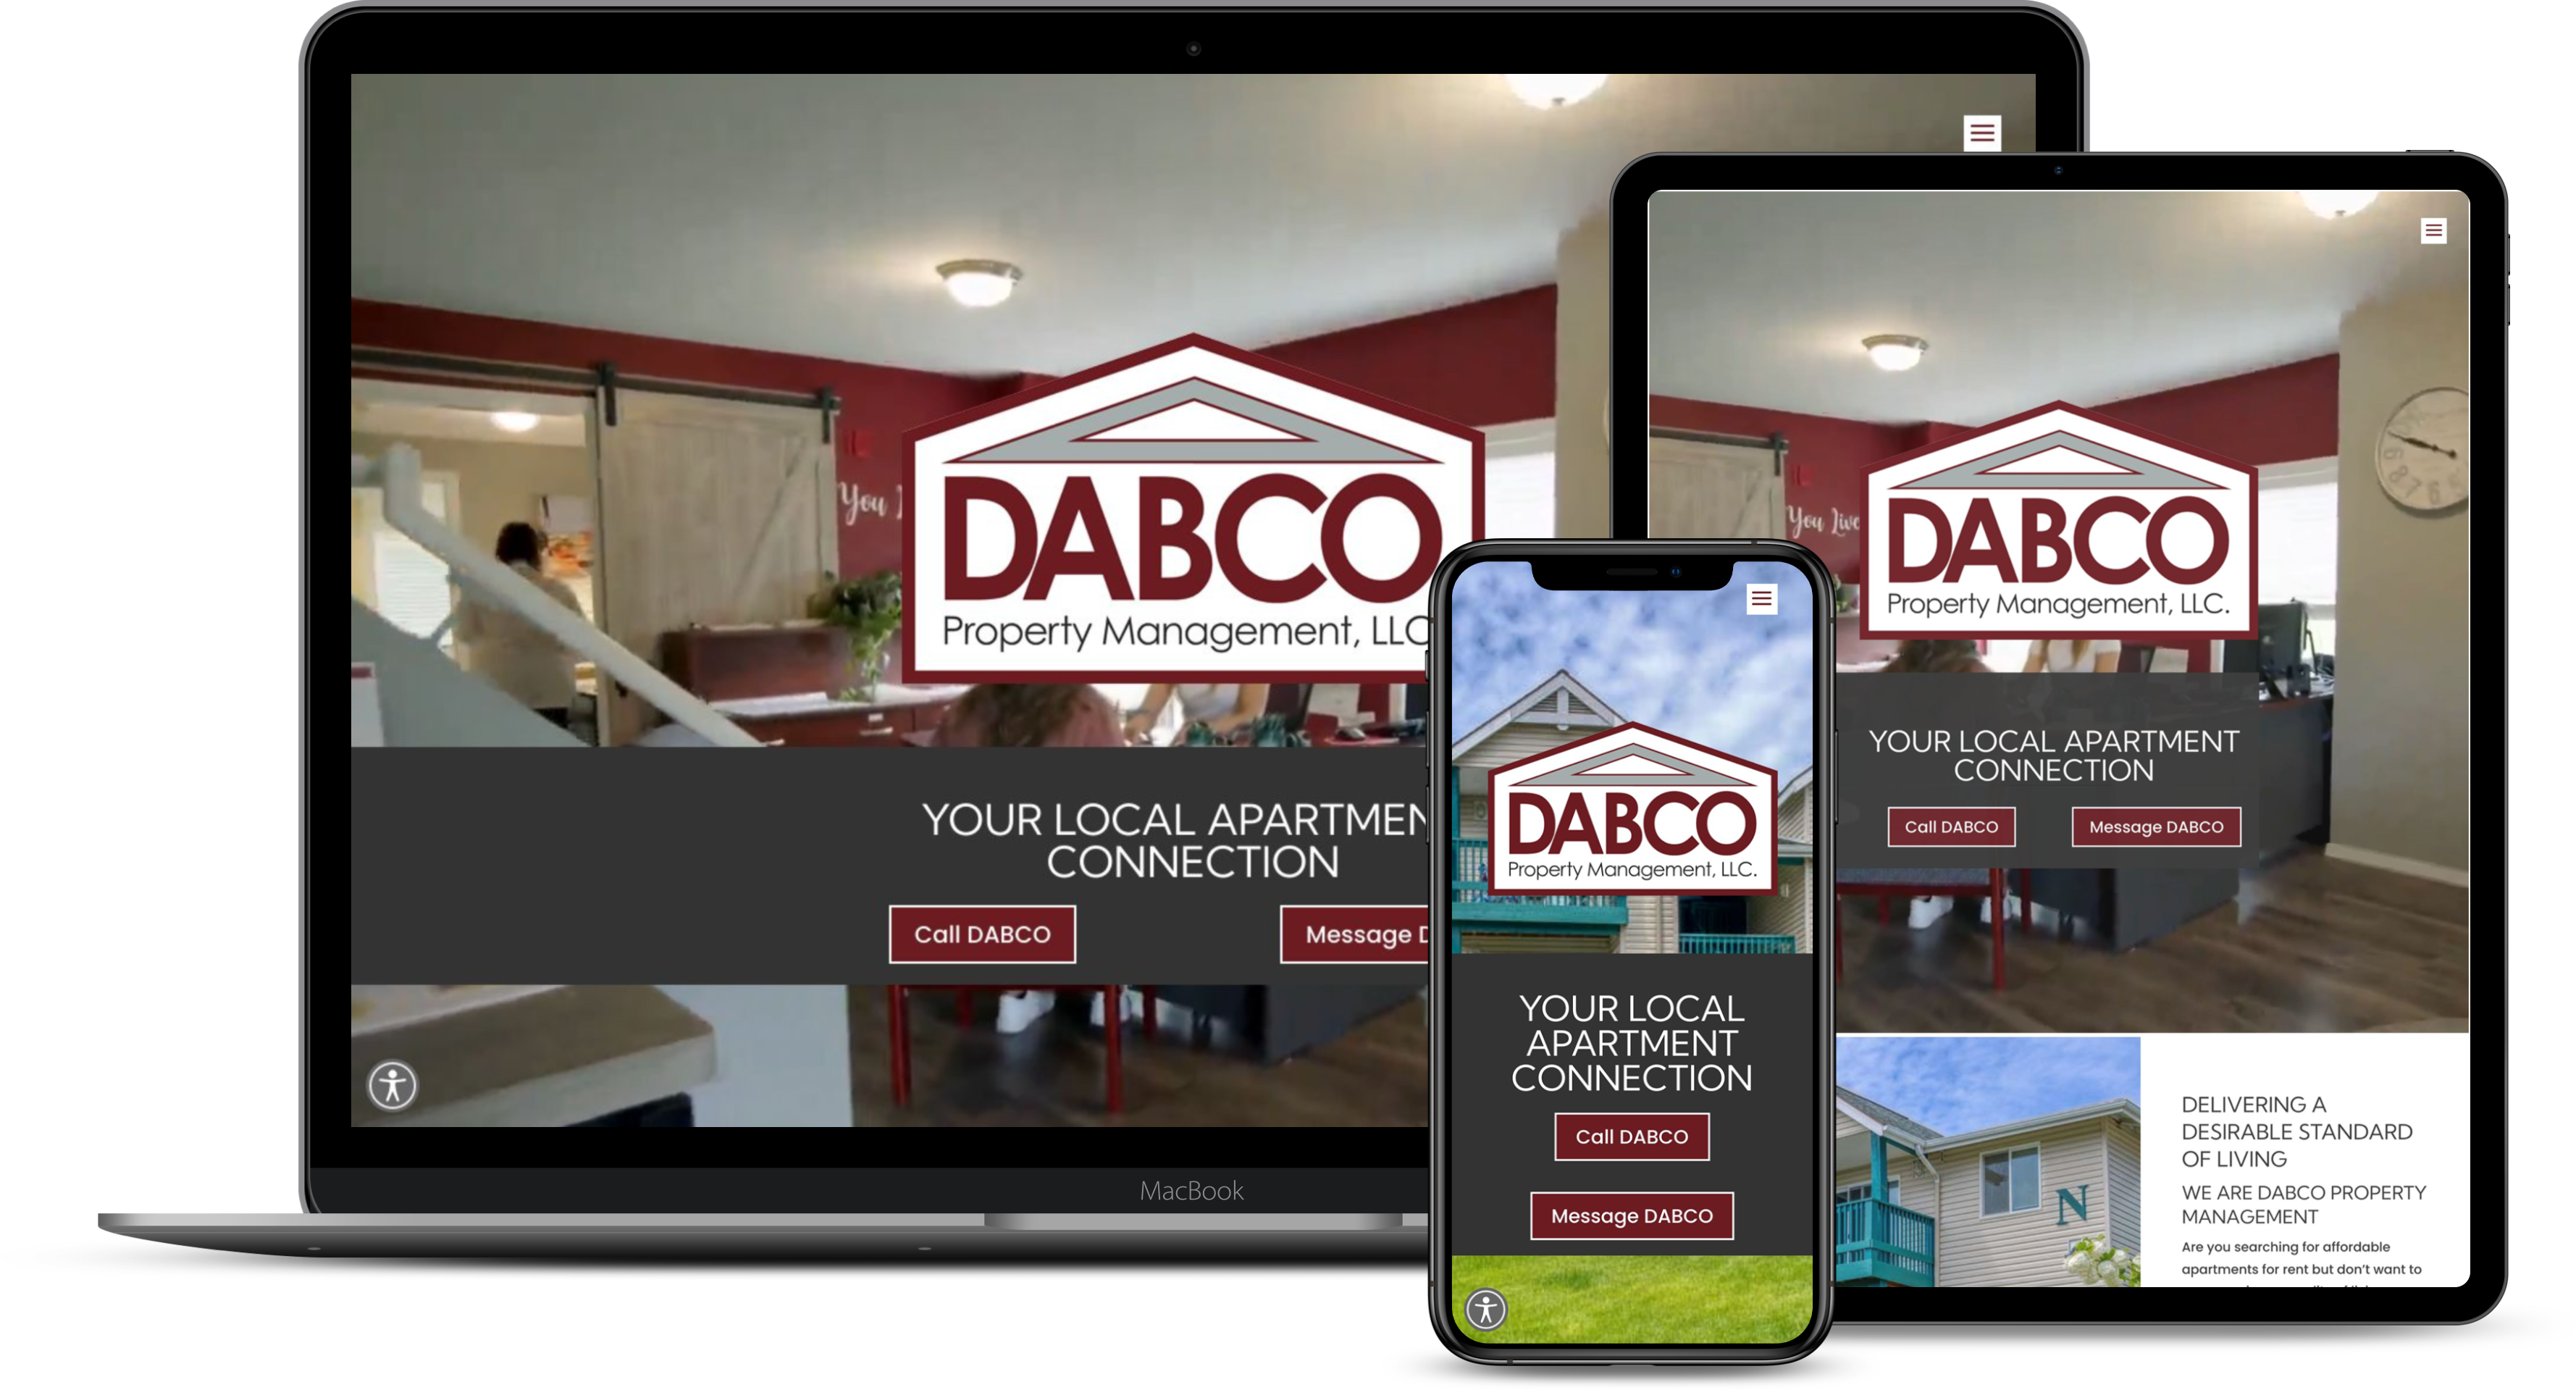 Dabco Property Management LLC